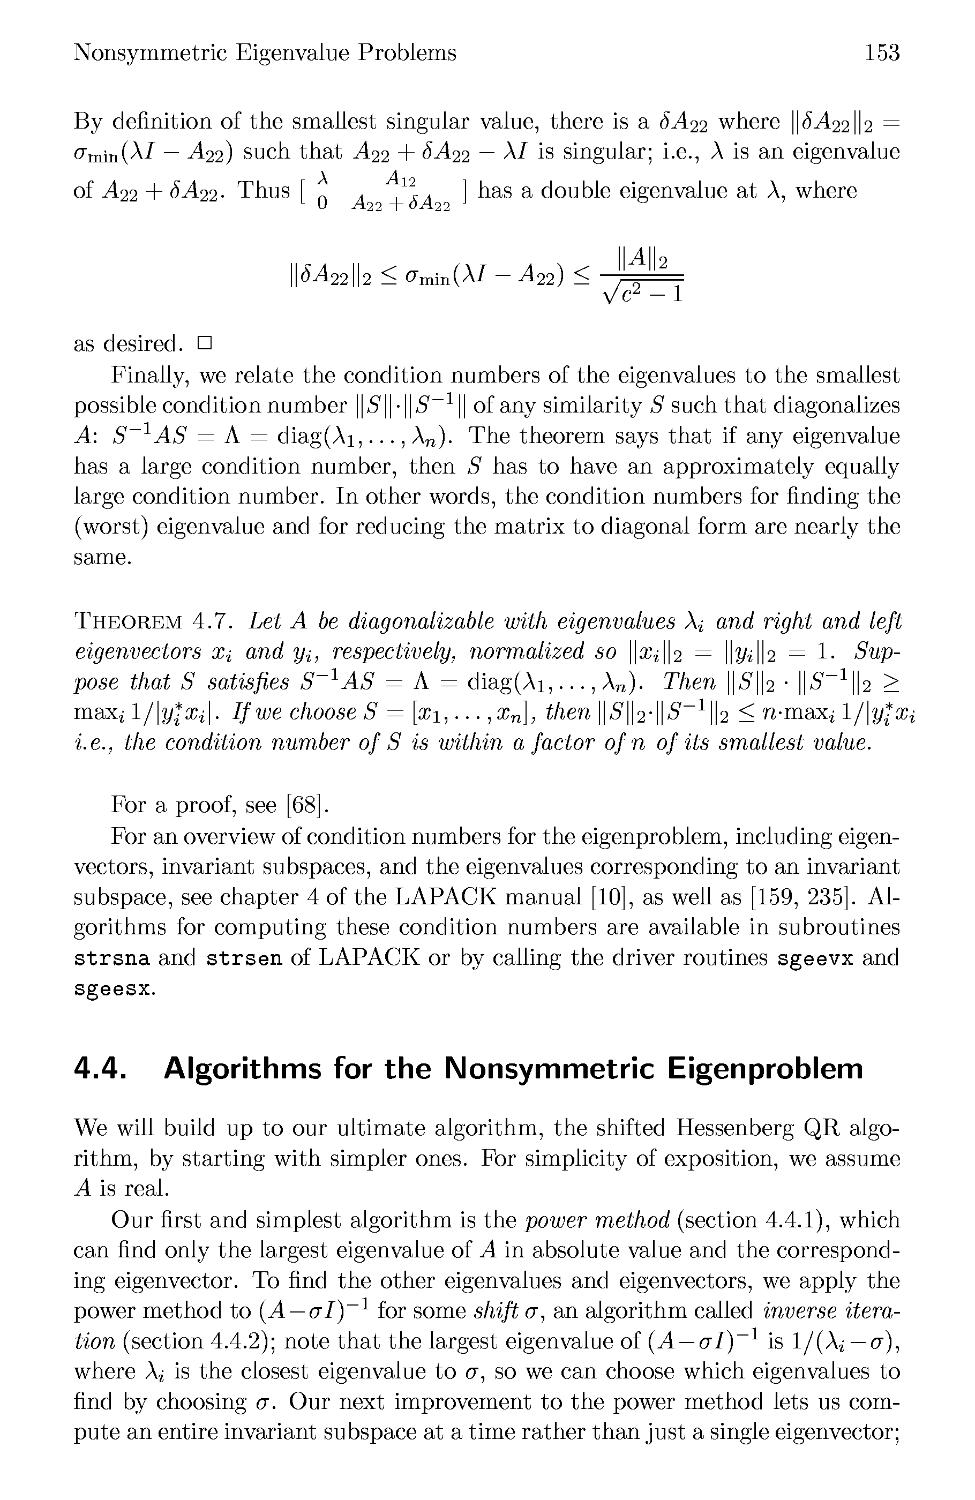 4.4 Algorithms for the Nonsymmetric Eigenproblem